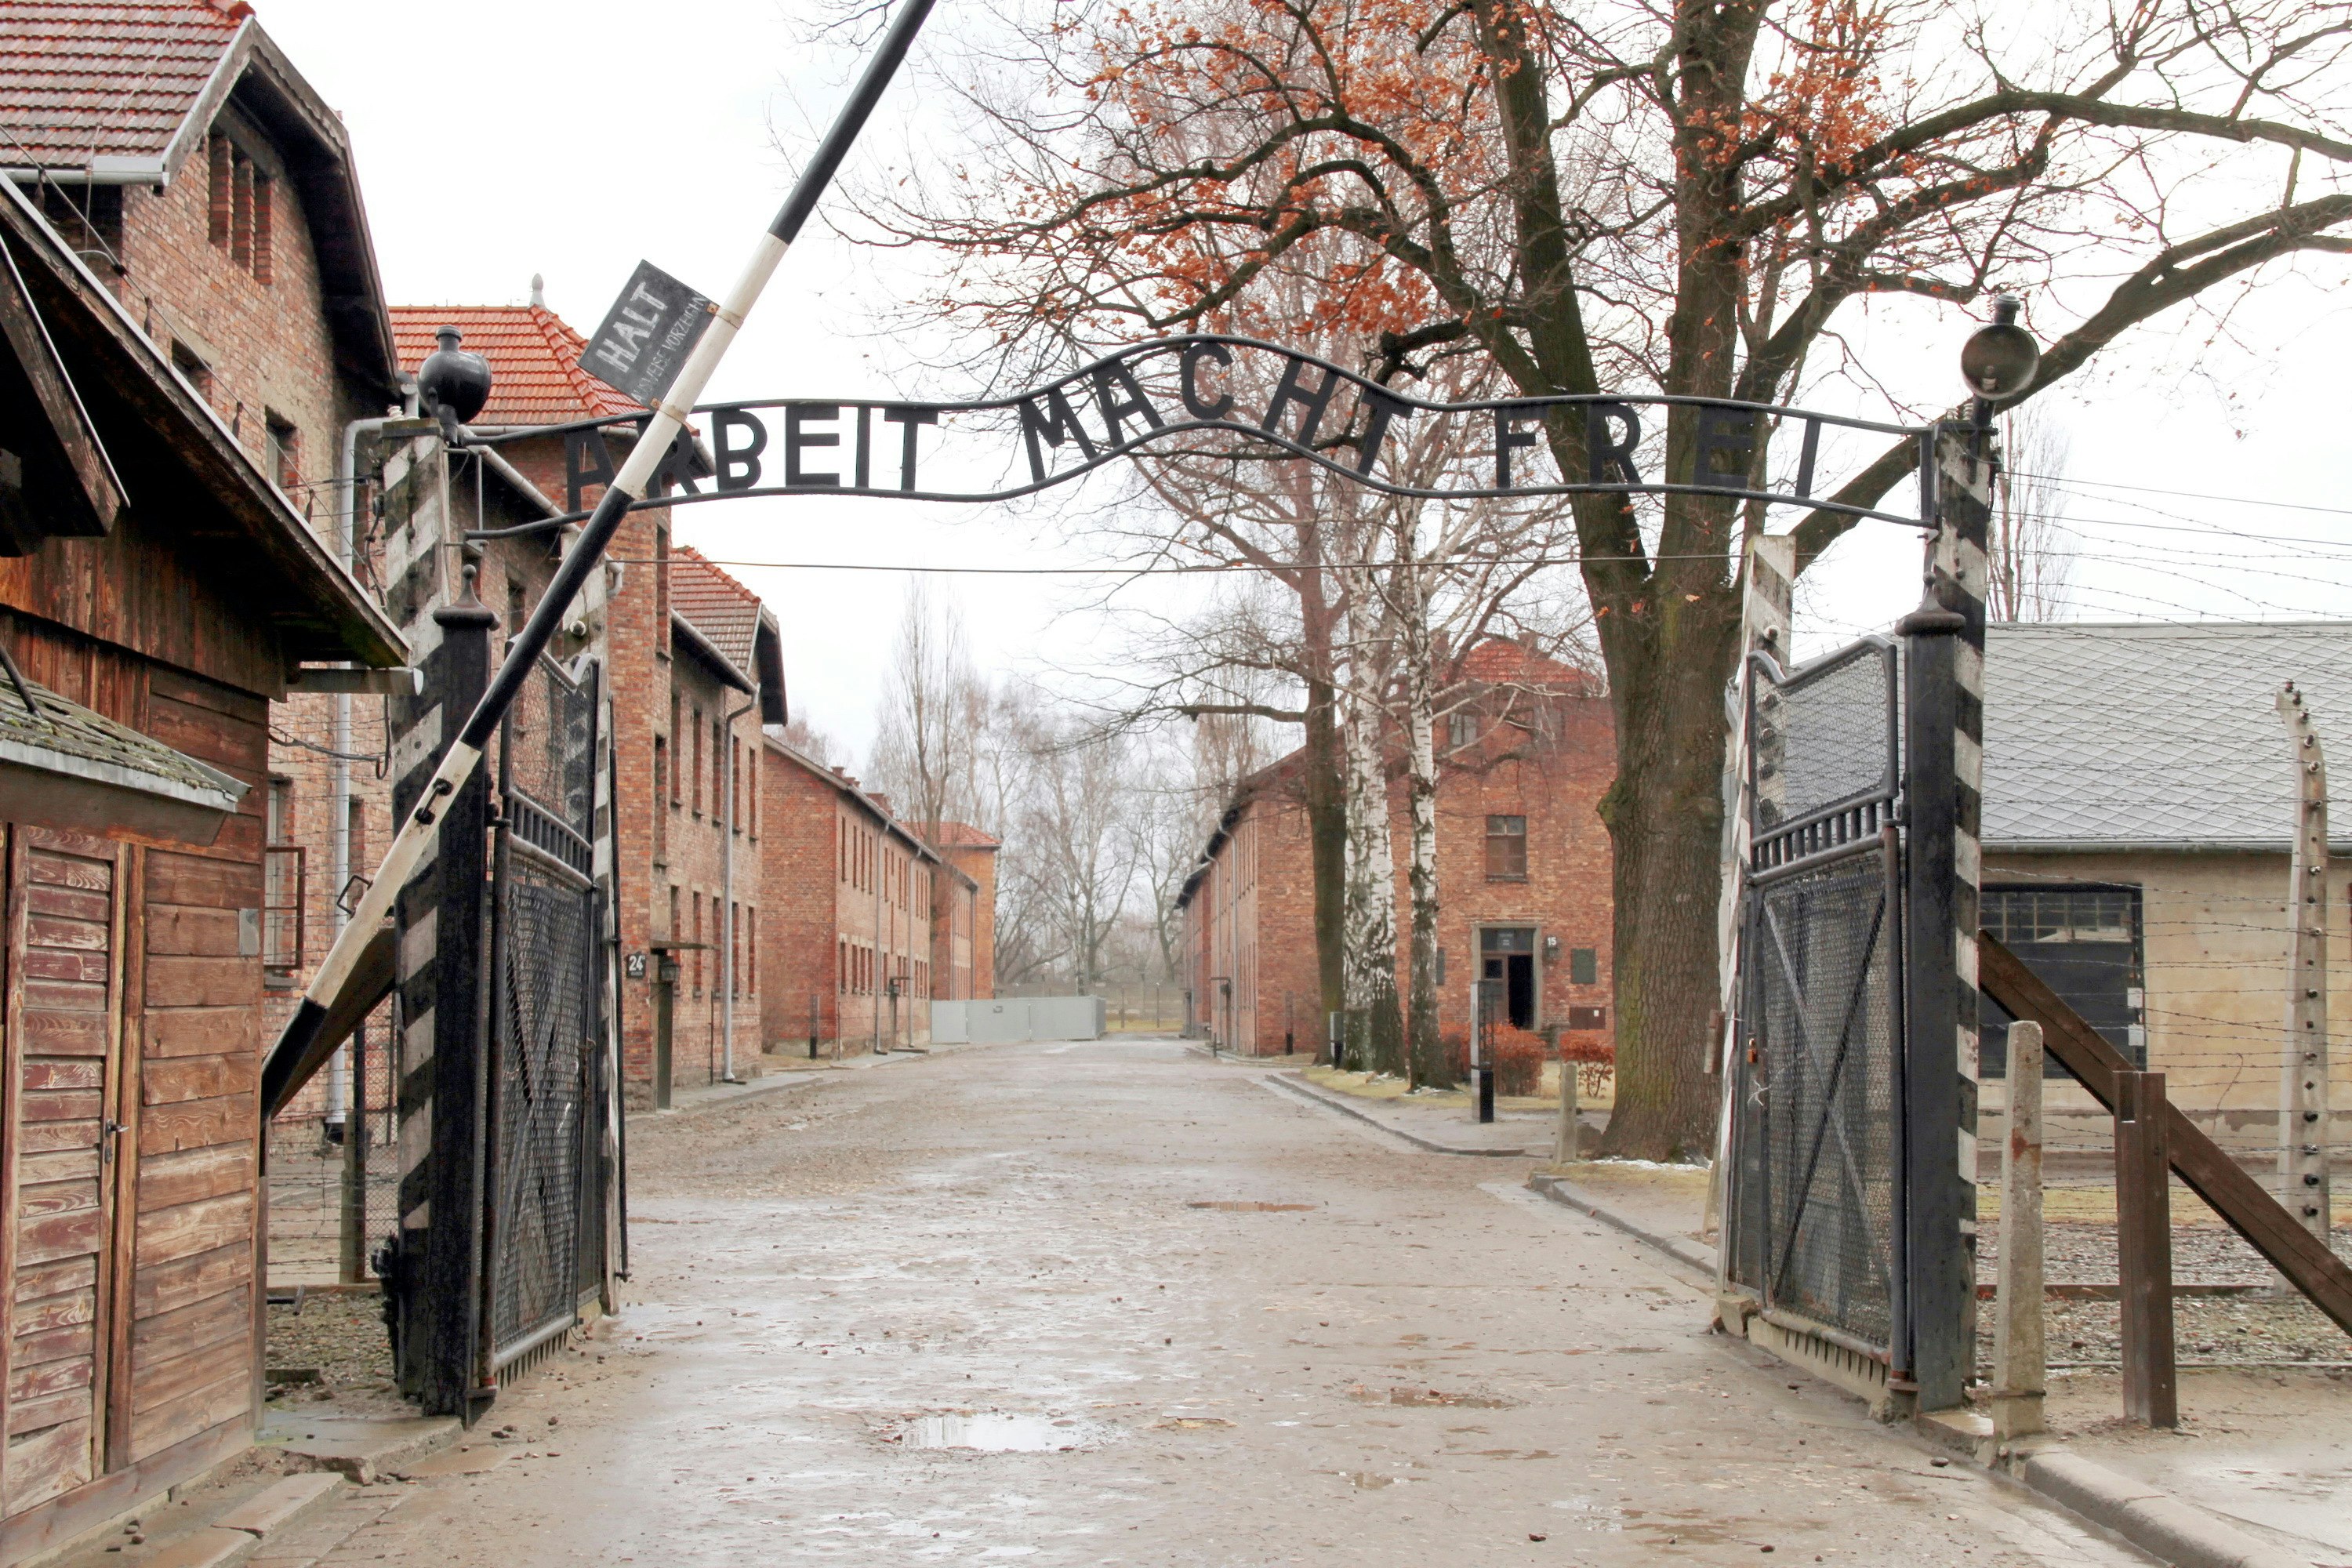 The gates to Auschwitz Birkenau Concentration Camp in Poland